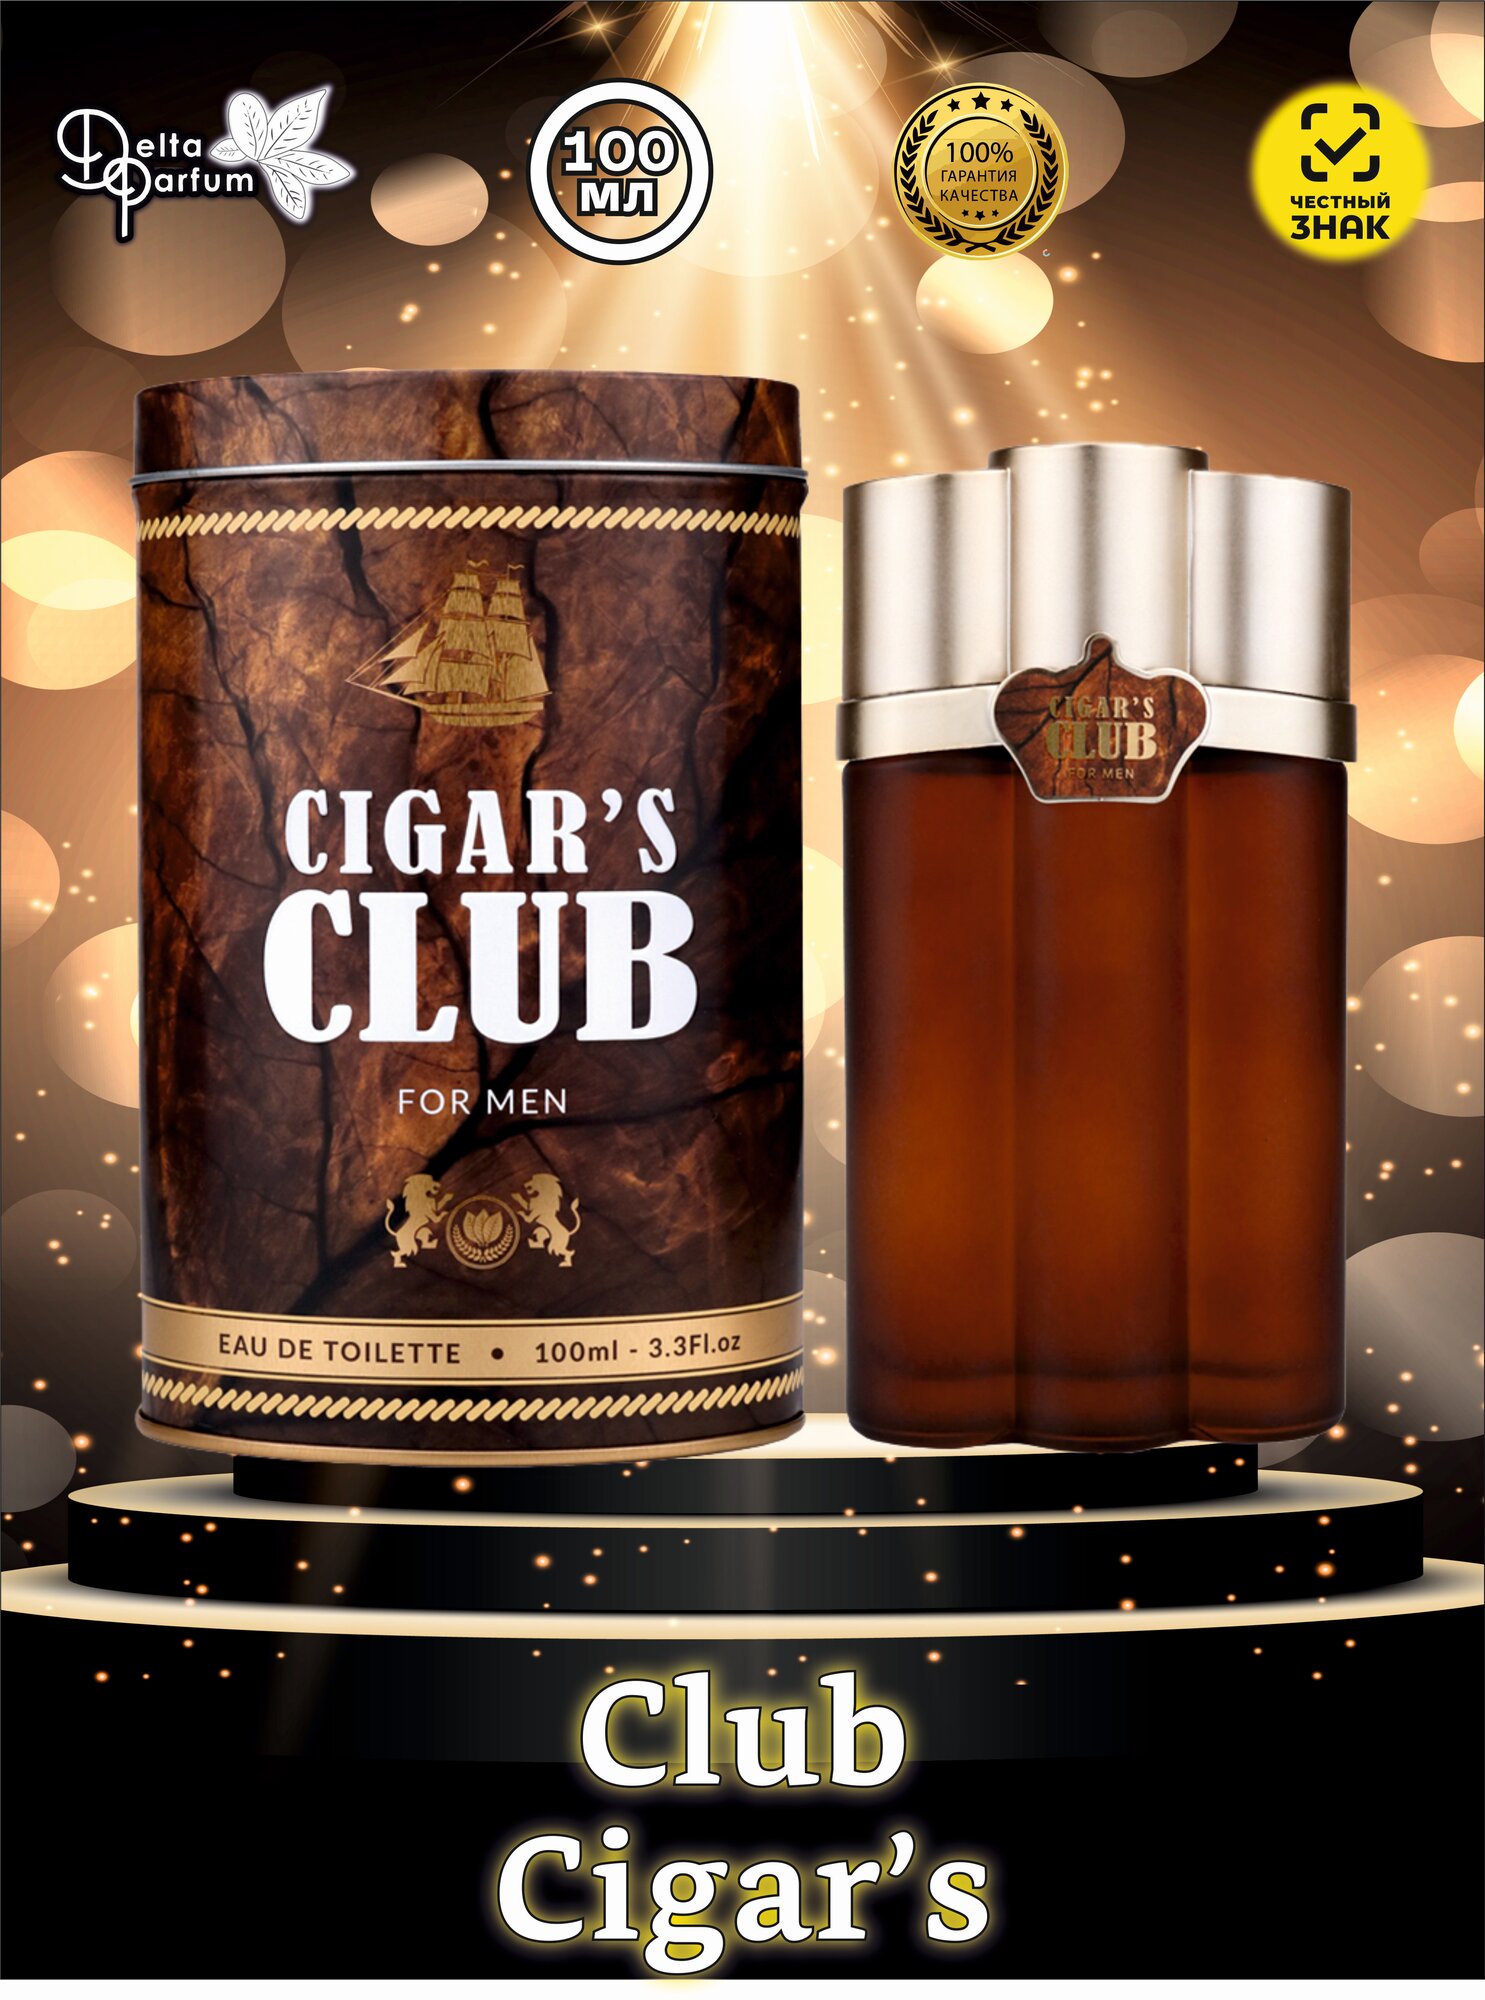 Delta parfum Туалетная вода мужская Club Cigars